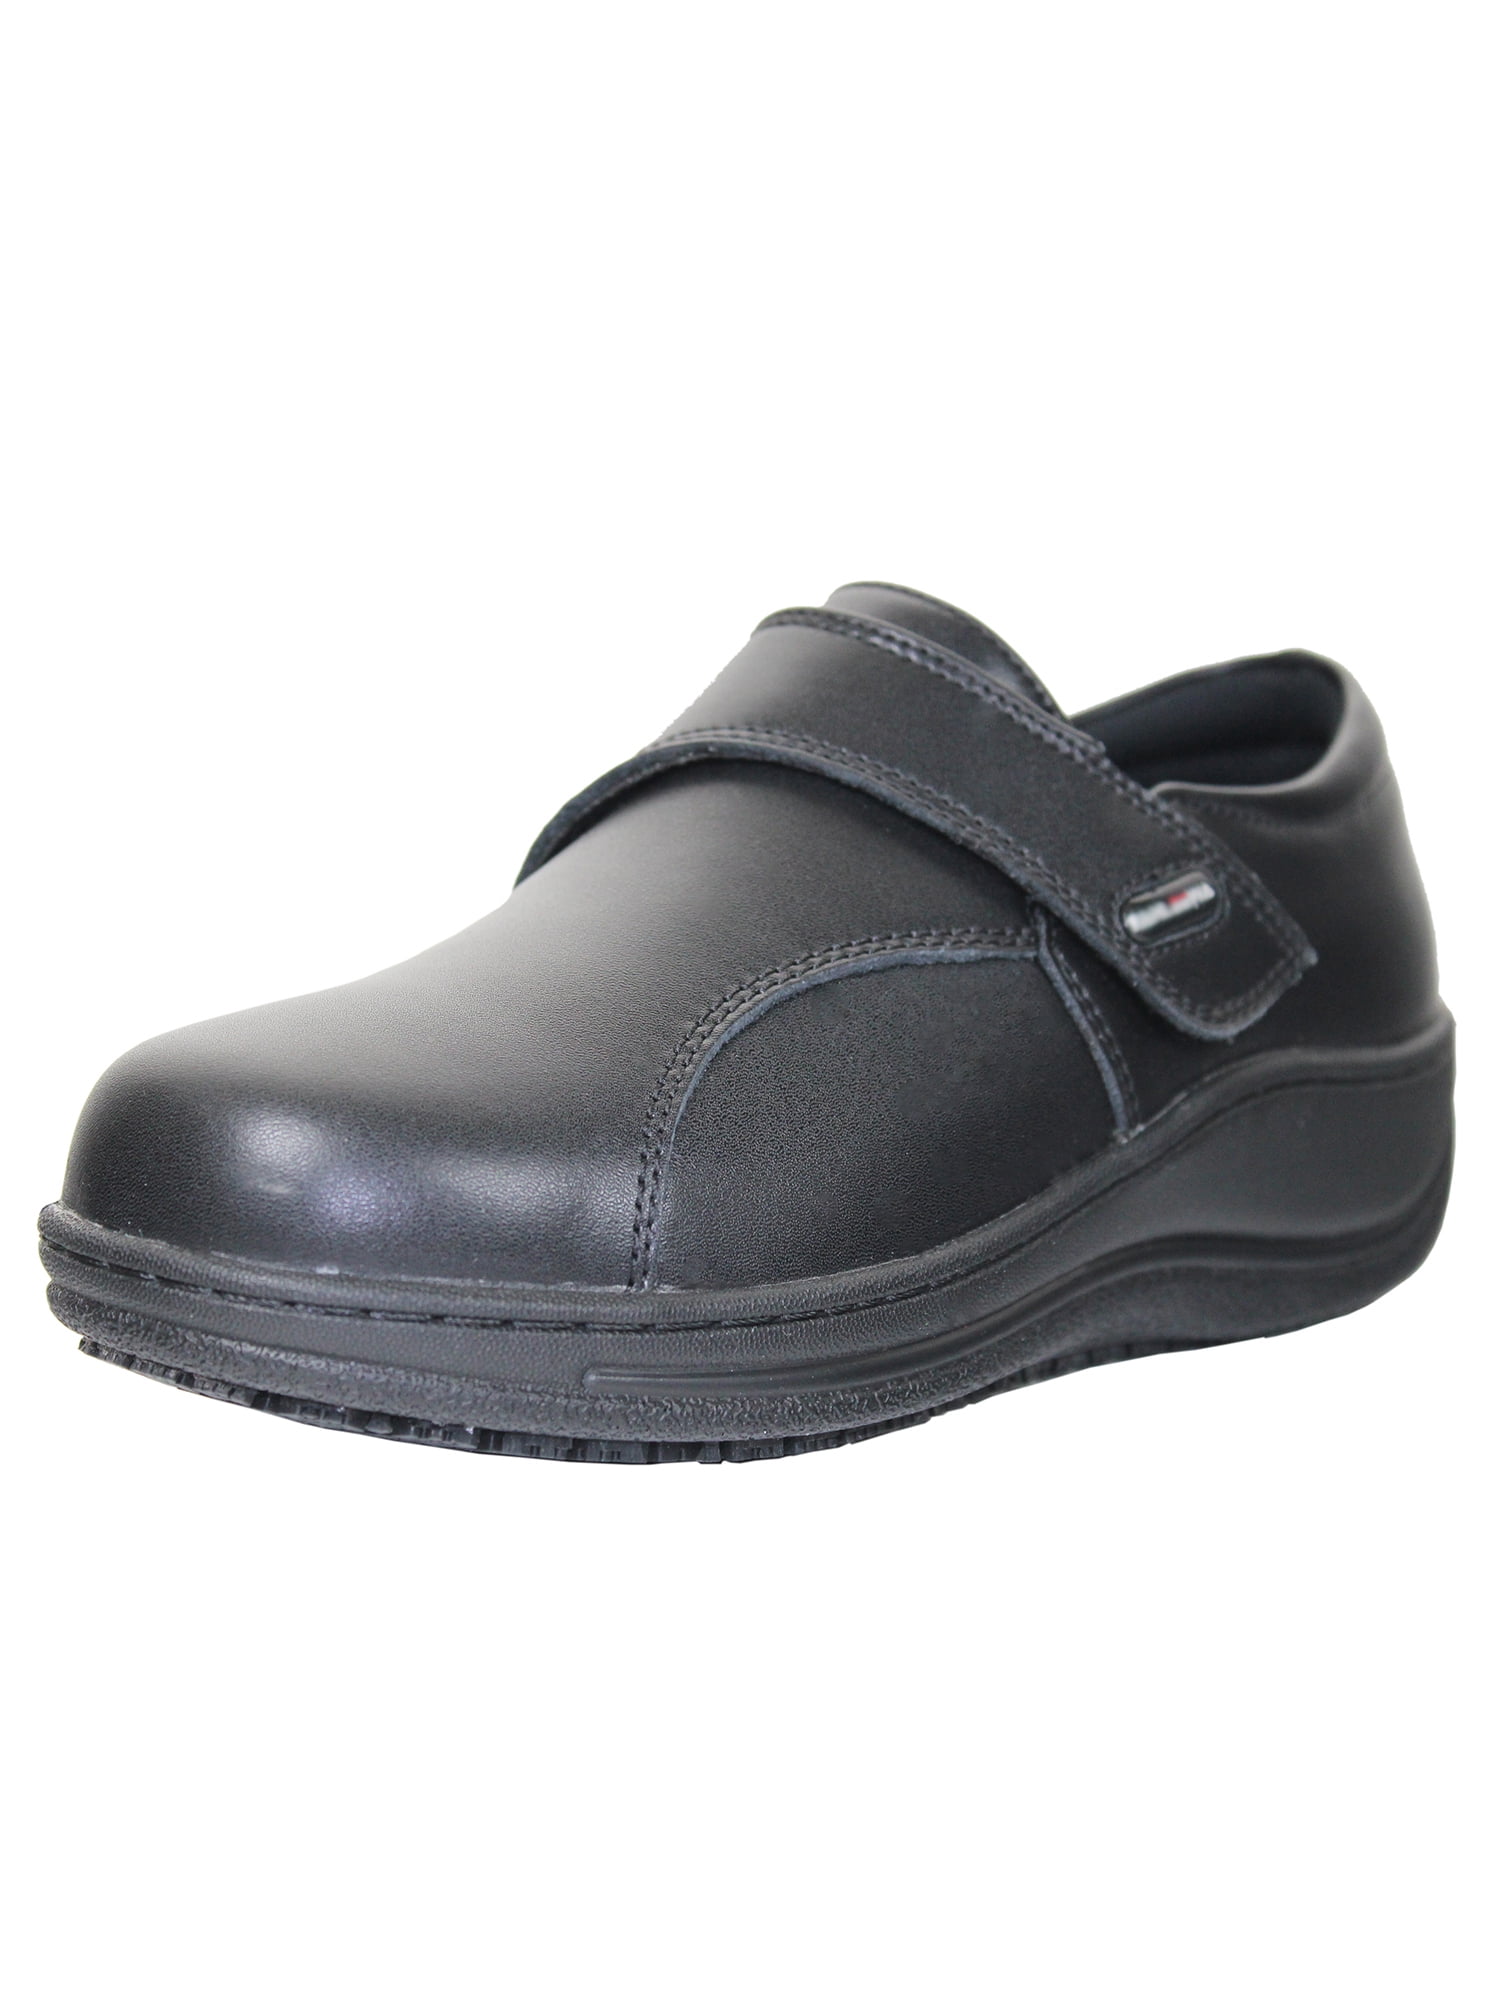 slip resistant shoes for women walmart